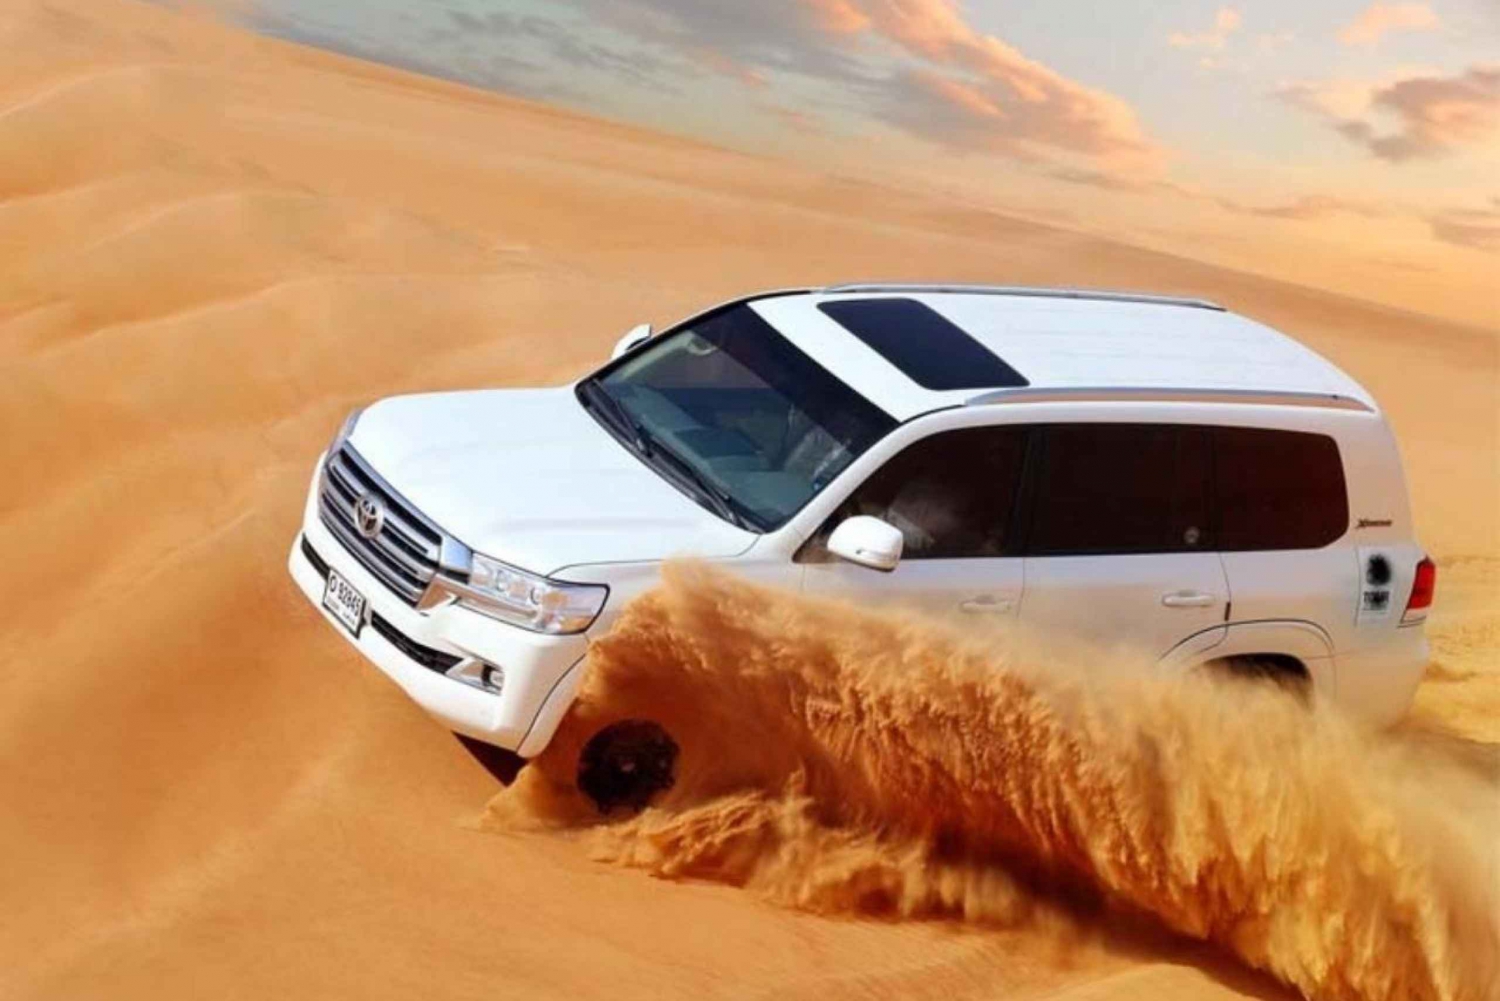 Dubai: Wüsten-Dünensafaris, Kamel, Sandboard, BBQ & Shows